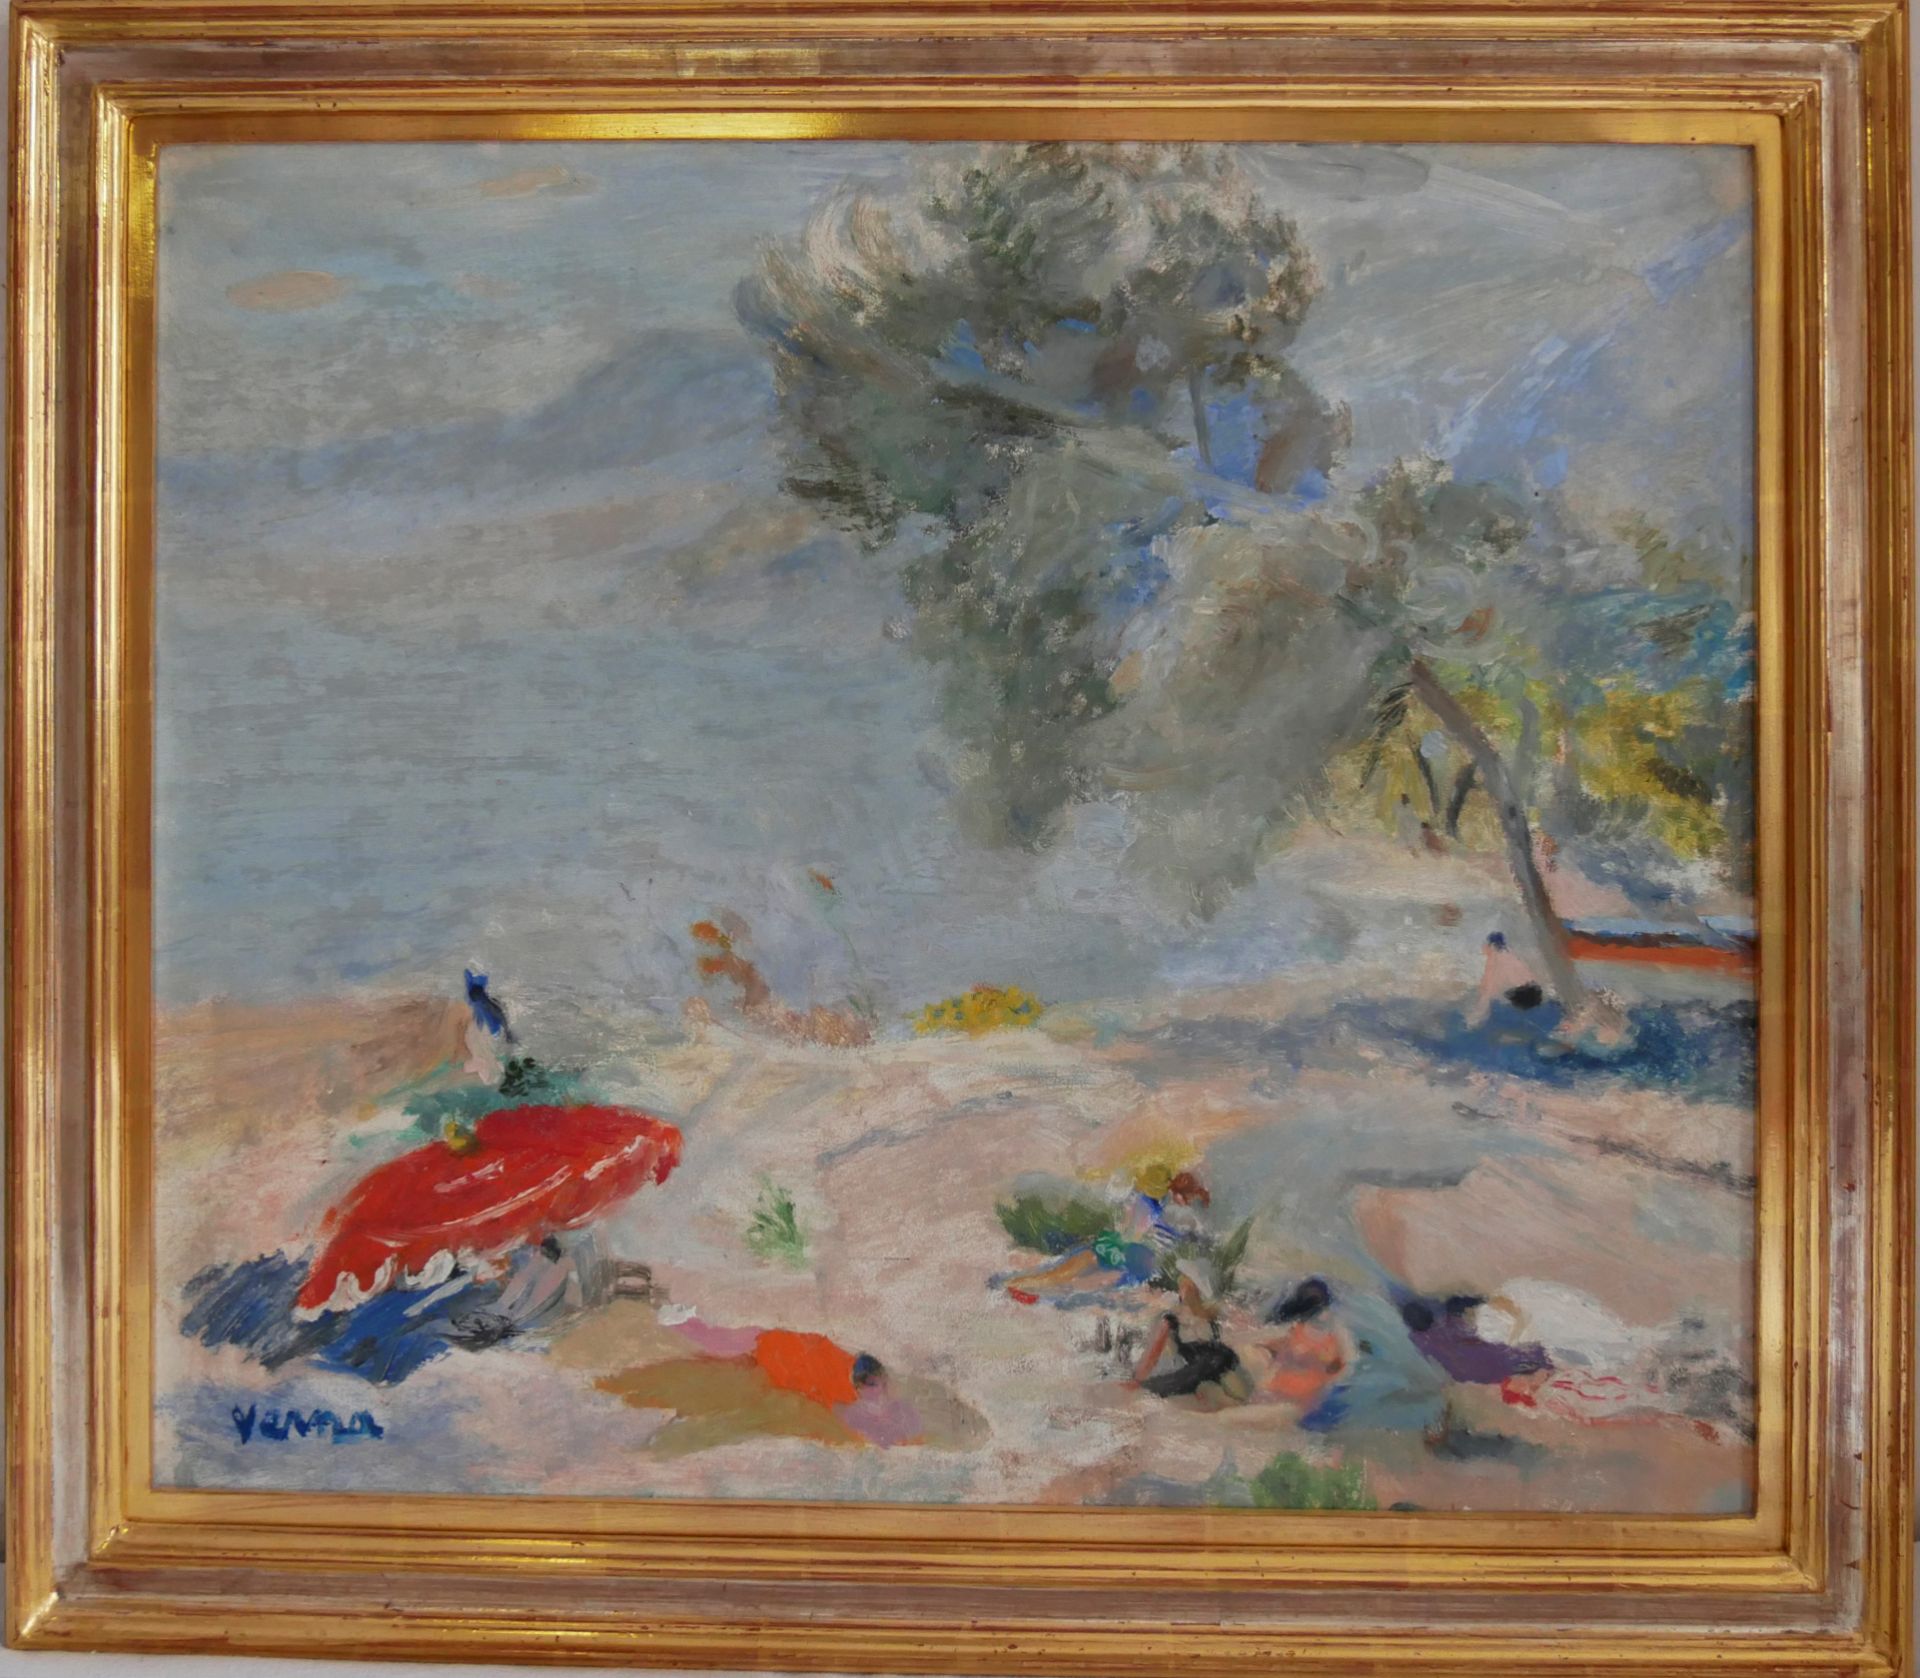 Verna (wohl Germaine Verna 1908-1975), Ölgemälde auf Malkarton, "Am Strand", links unten Signatur,